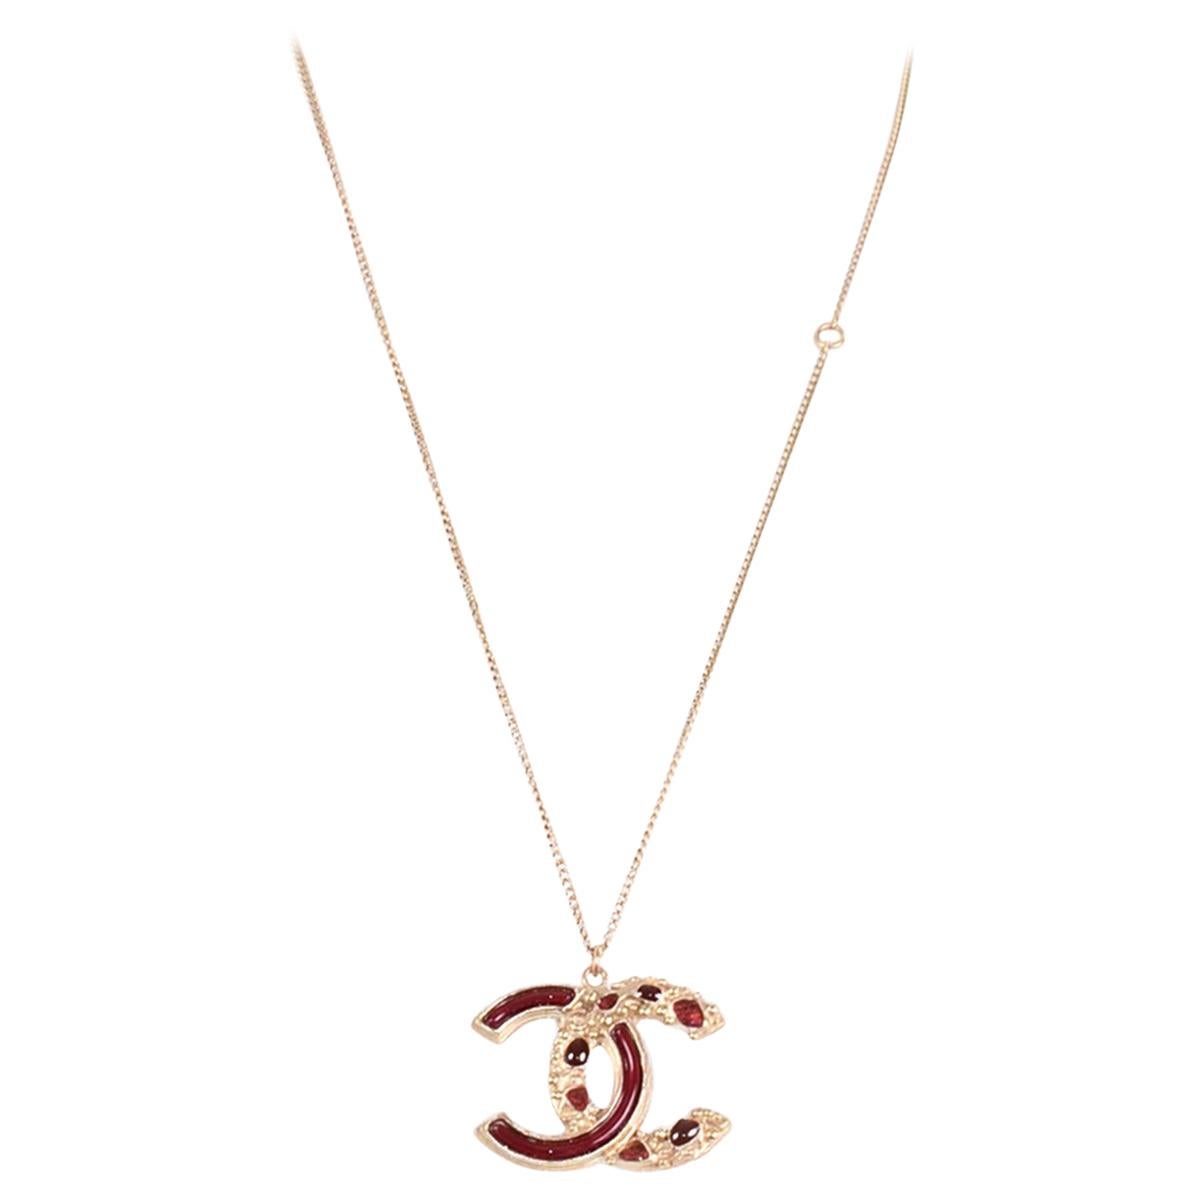 Chanel Gripoix CC Monogram Pendant Necklace Authentic in Original Box w/ Tag